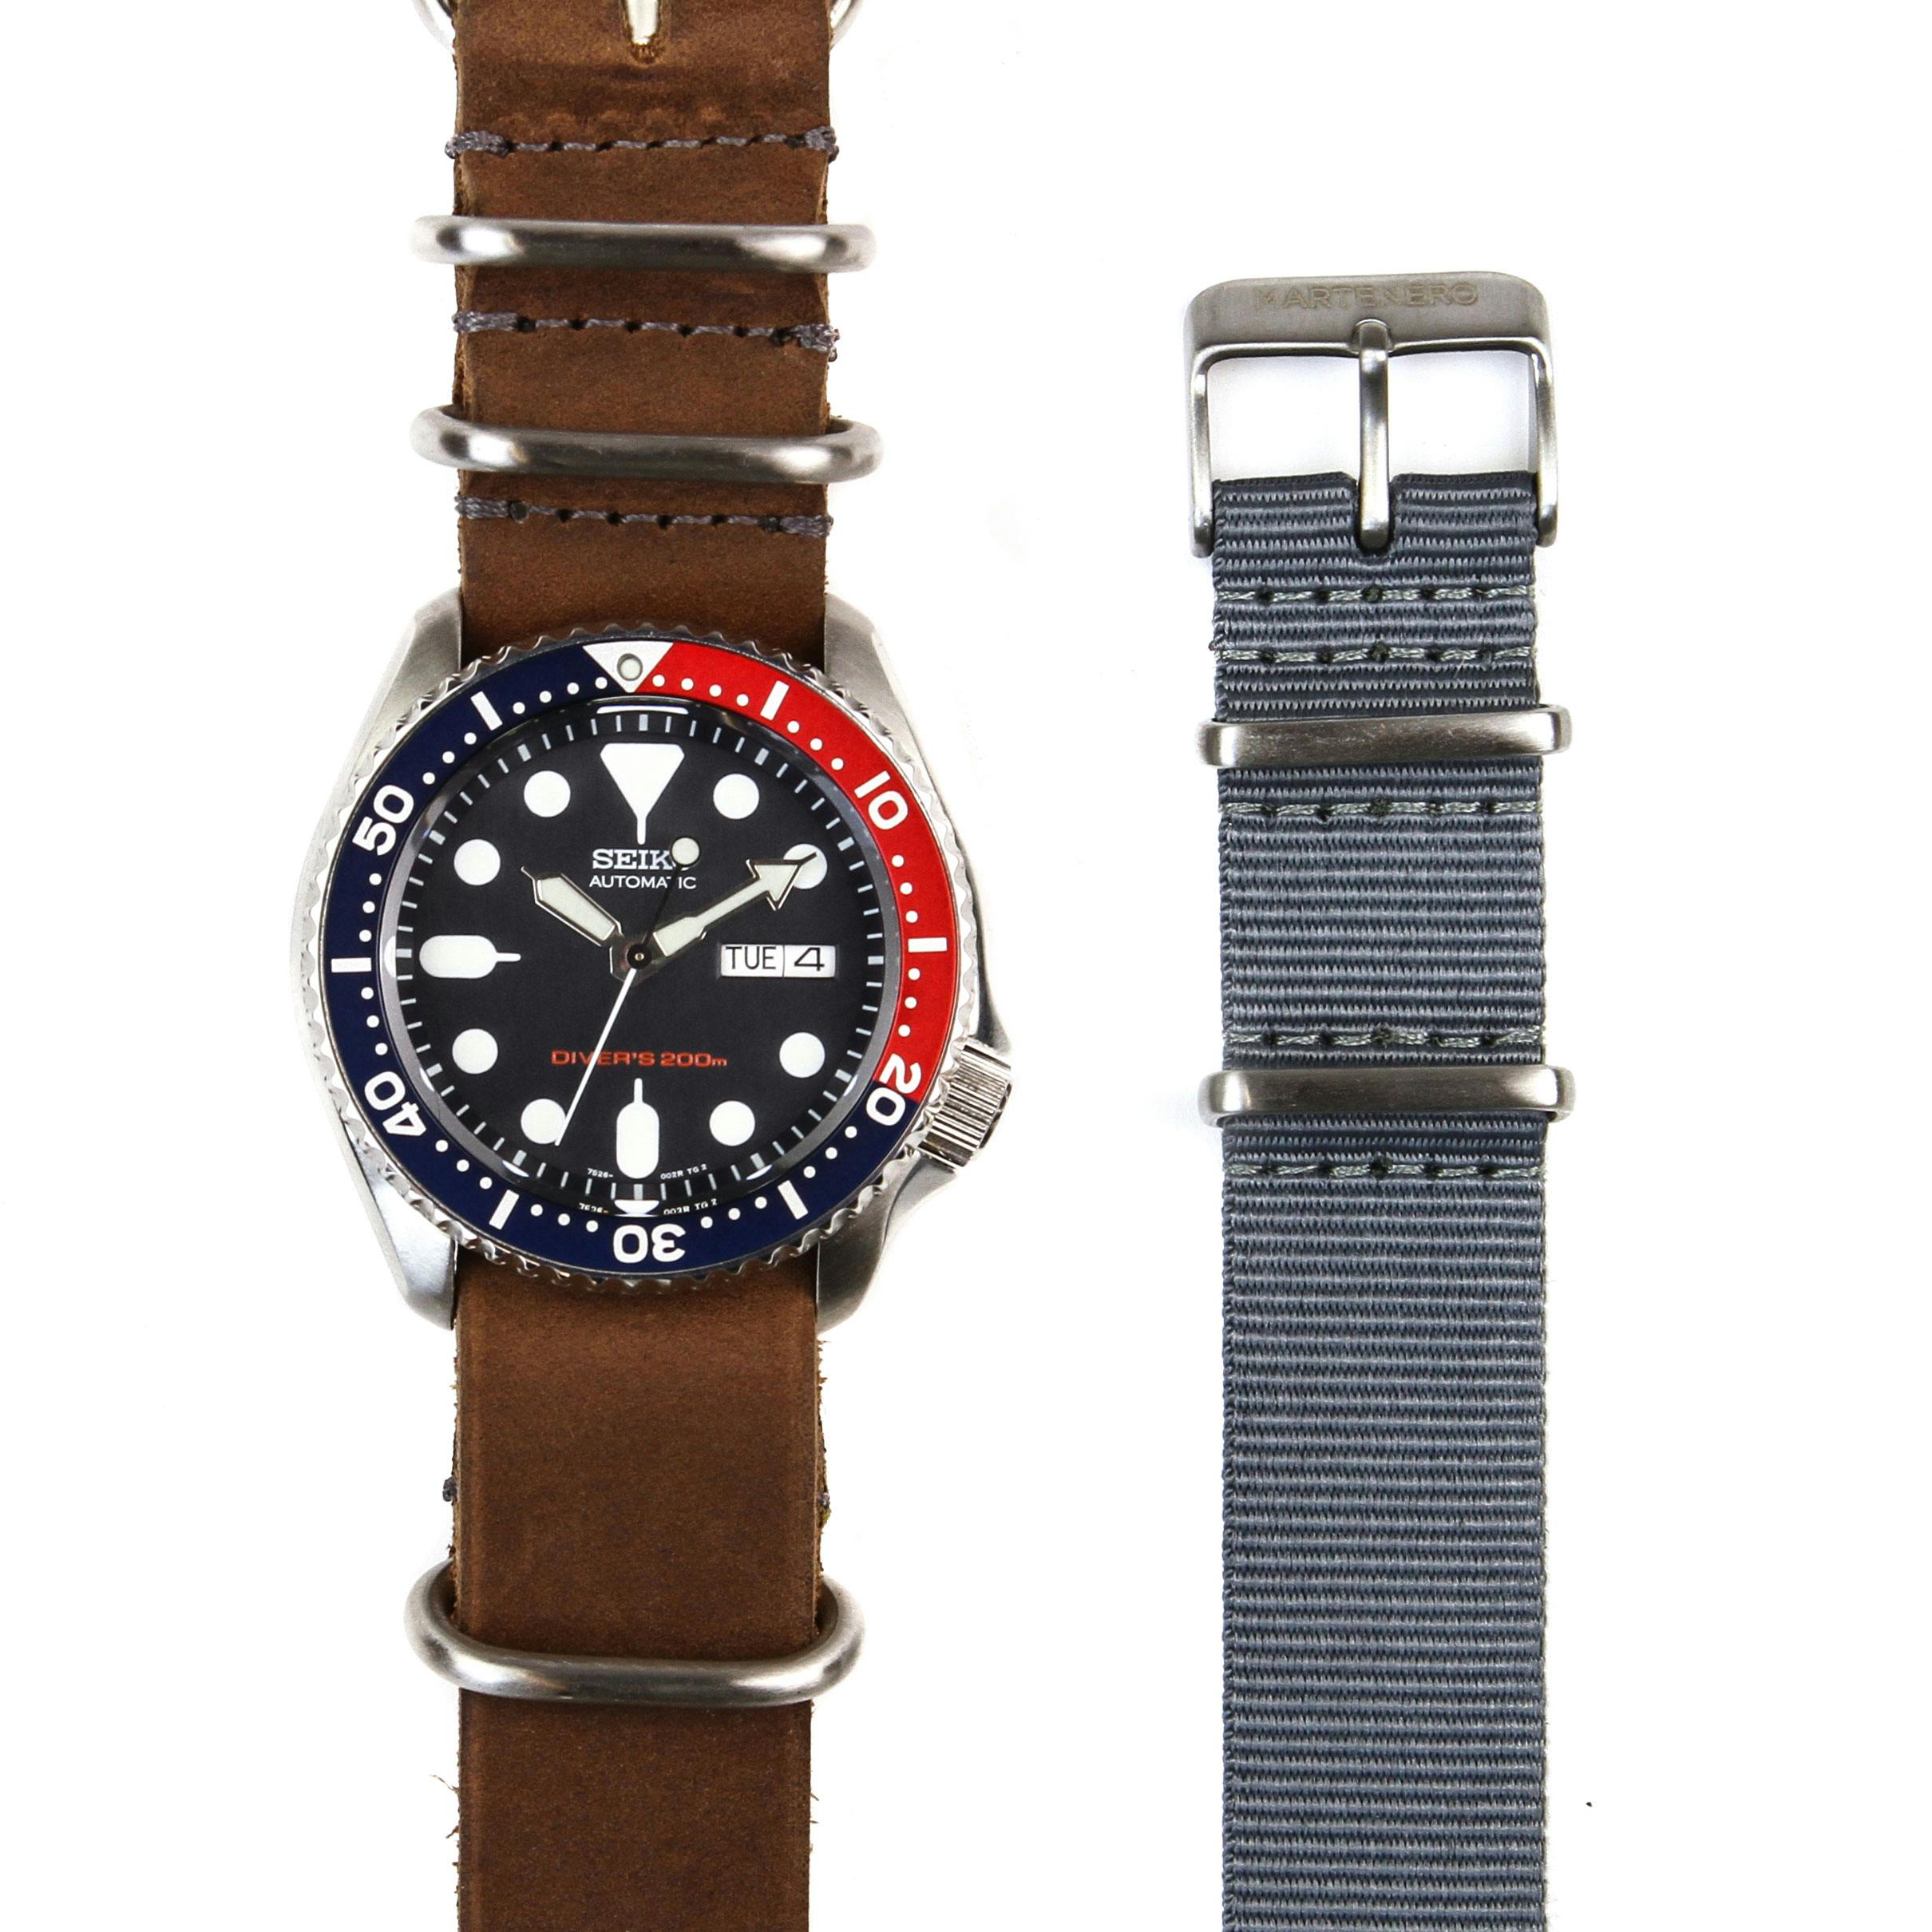 Huckberry Seiko Dive Watch - Red/ Blue/ Brown | Watches | Huckberry